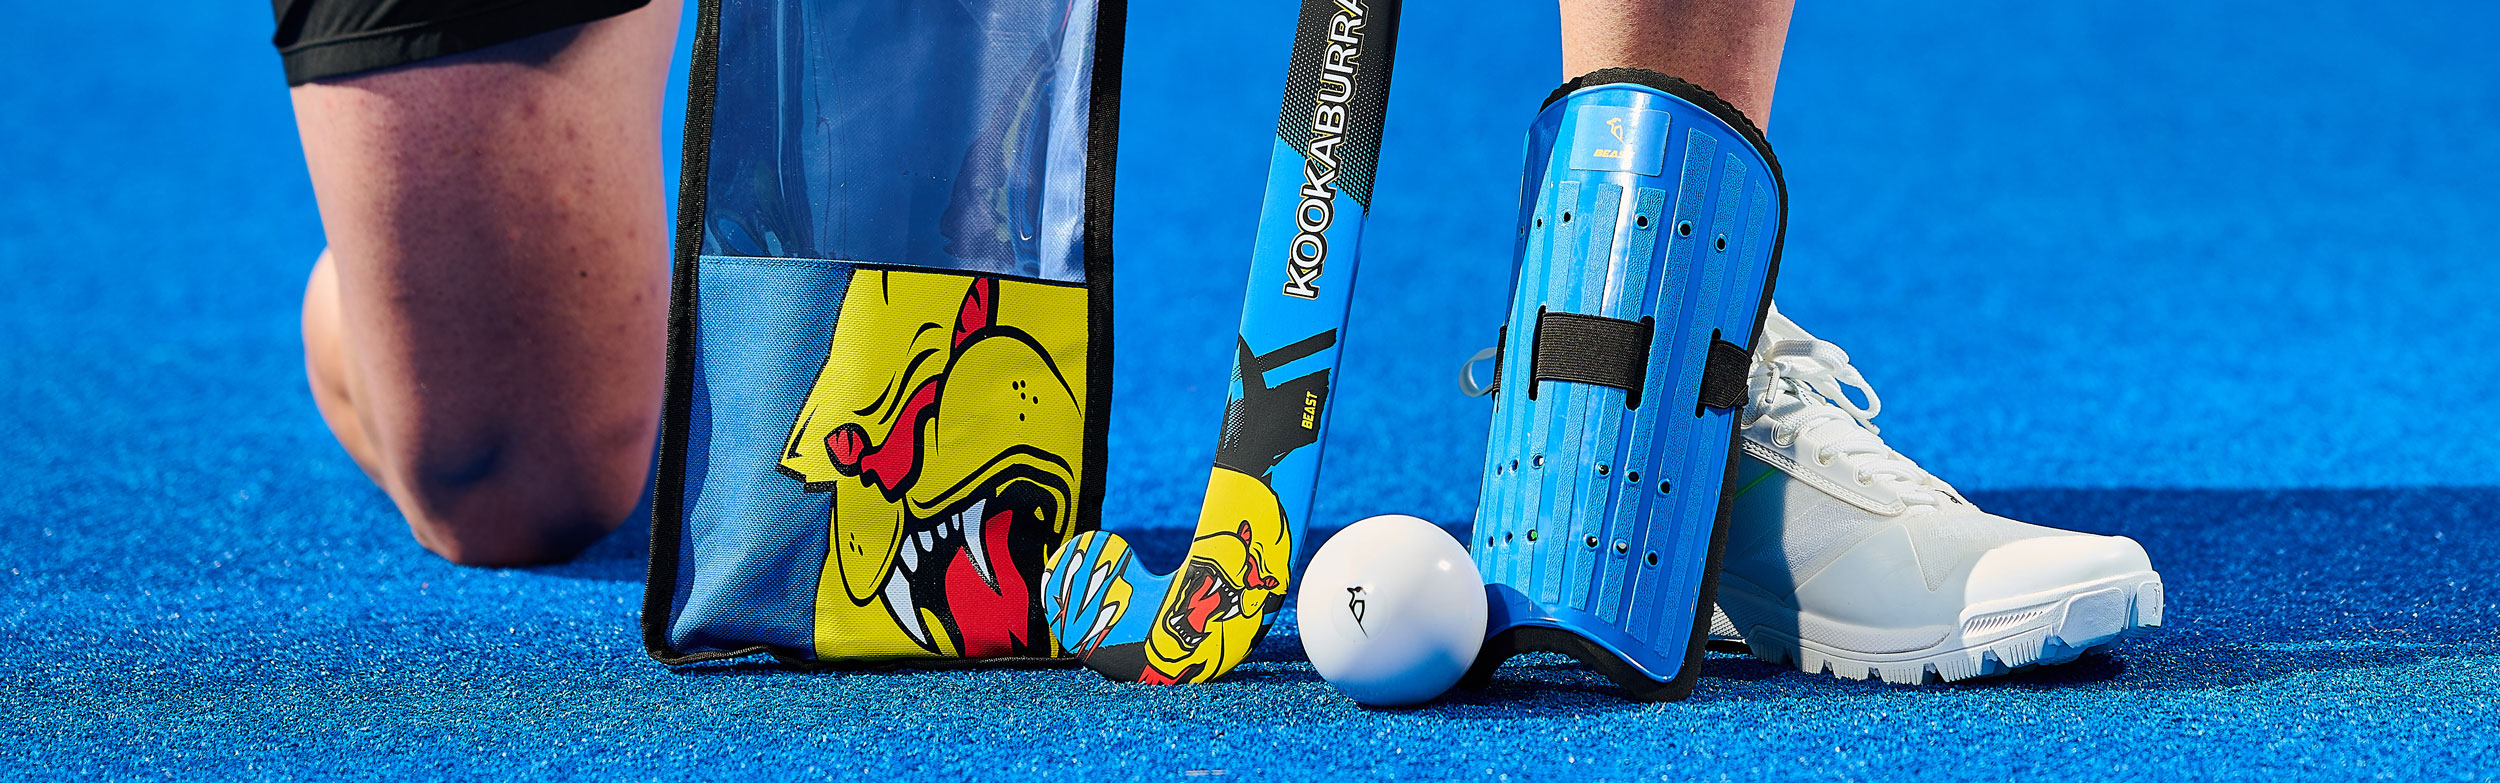 Buy Junior Hockey Sticks Online Kookaburra